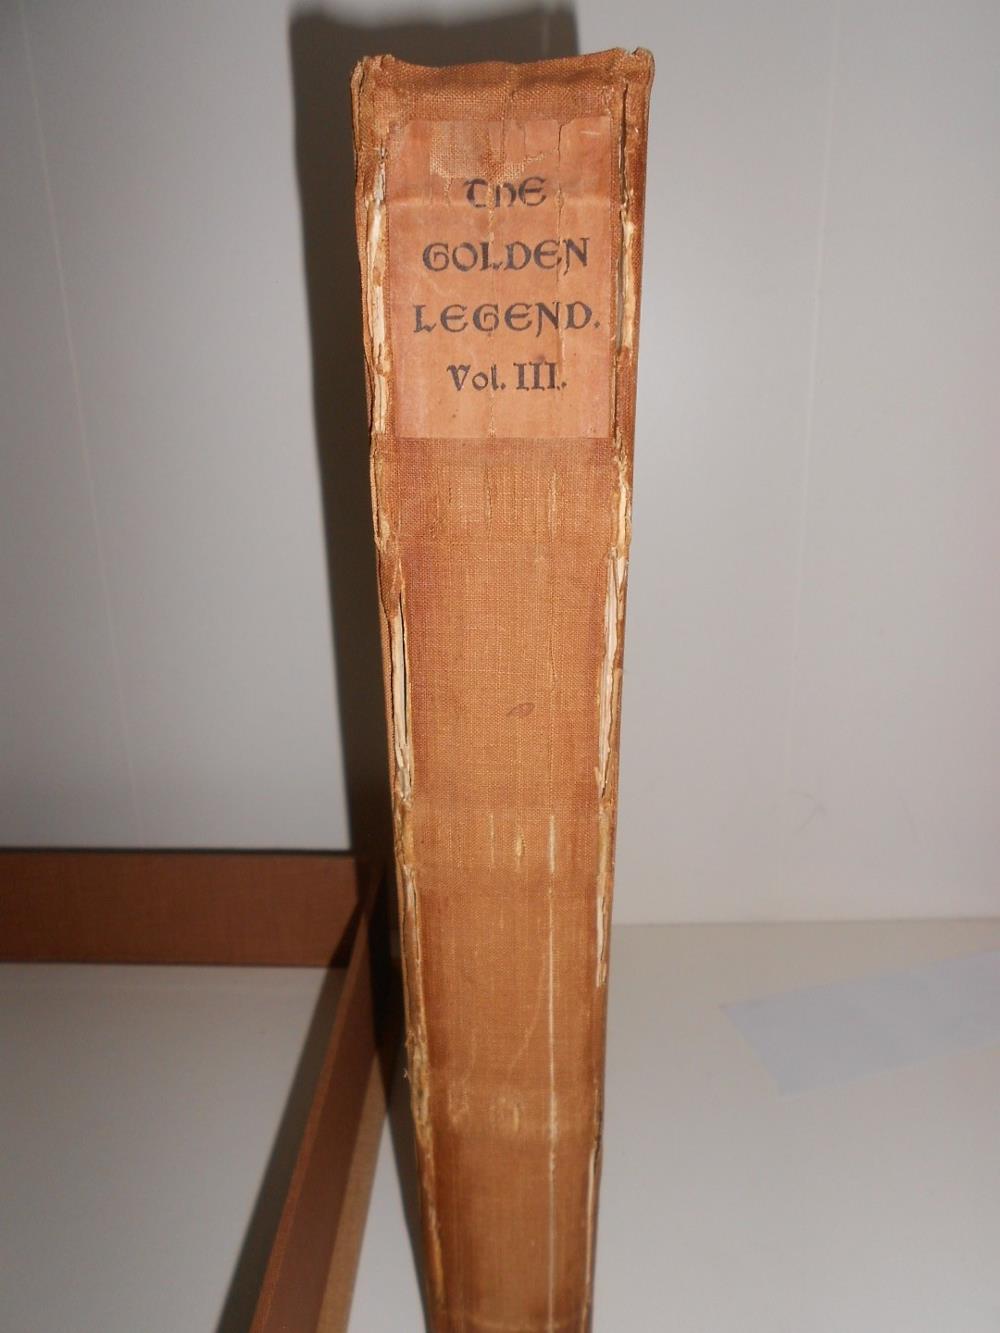 VORAGINE (Jacobus de) The Golden Legend, translated by William Caxton, 3 volumes, Kelmscott Press, - Image 5 of 6